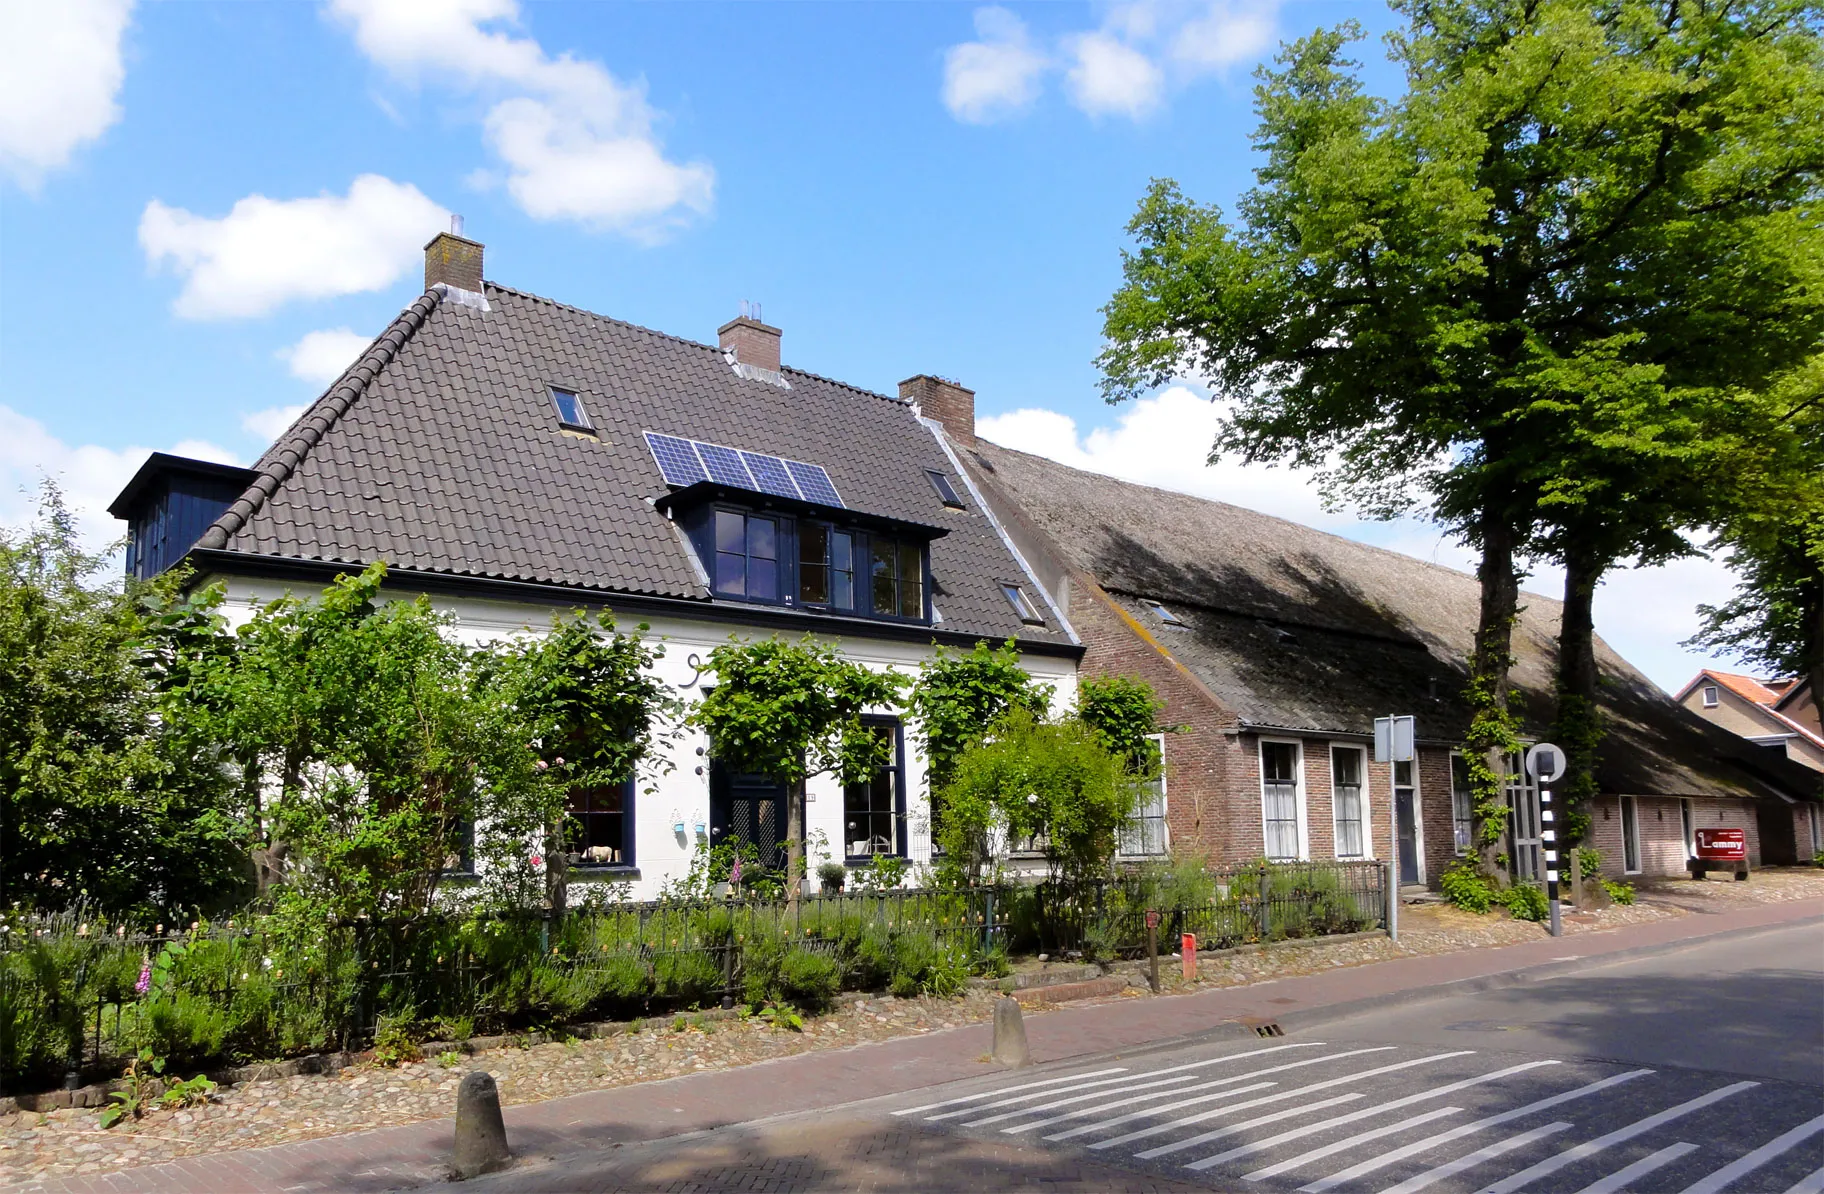 Photo showing: Boerderij - Dorpsstraat 19 in Vledder - rijksmonument